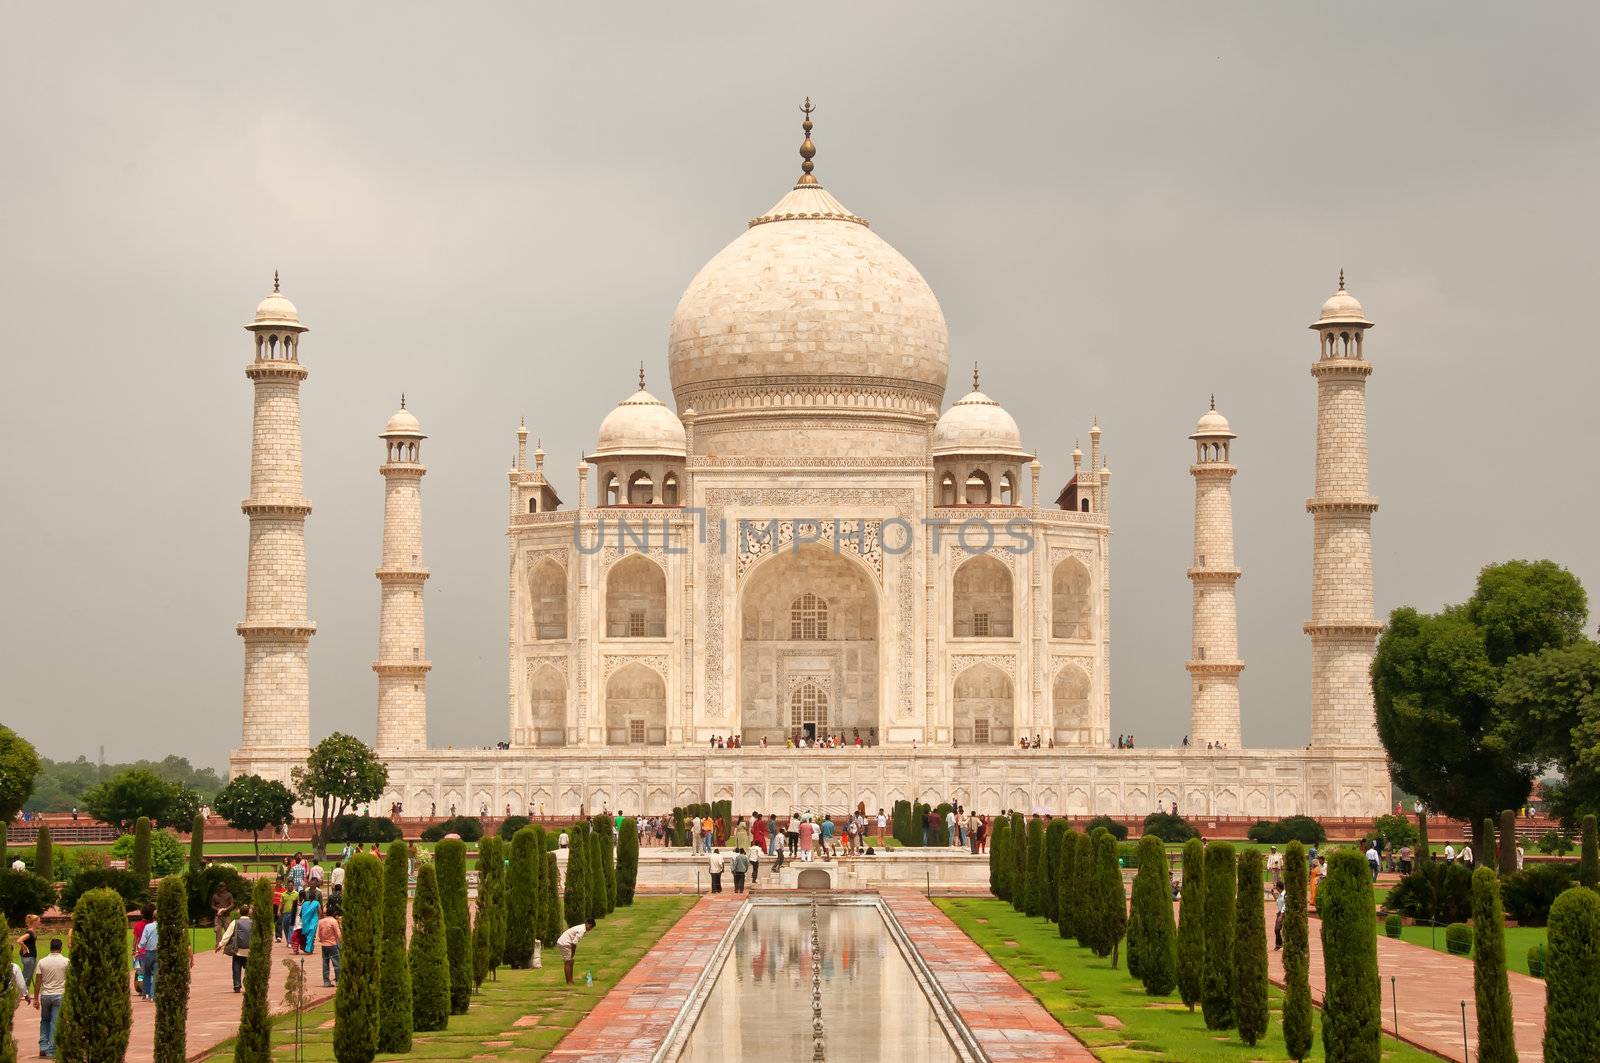 Taj Mahal fron horizontal view, Agra, India by martinm303